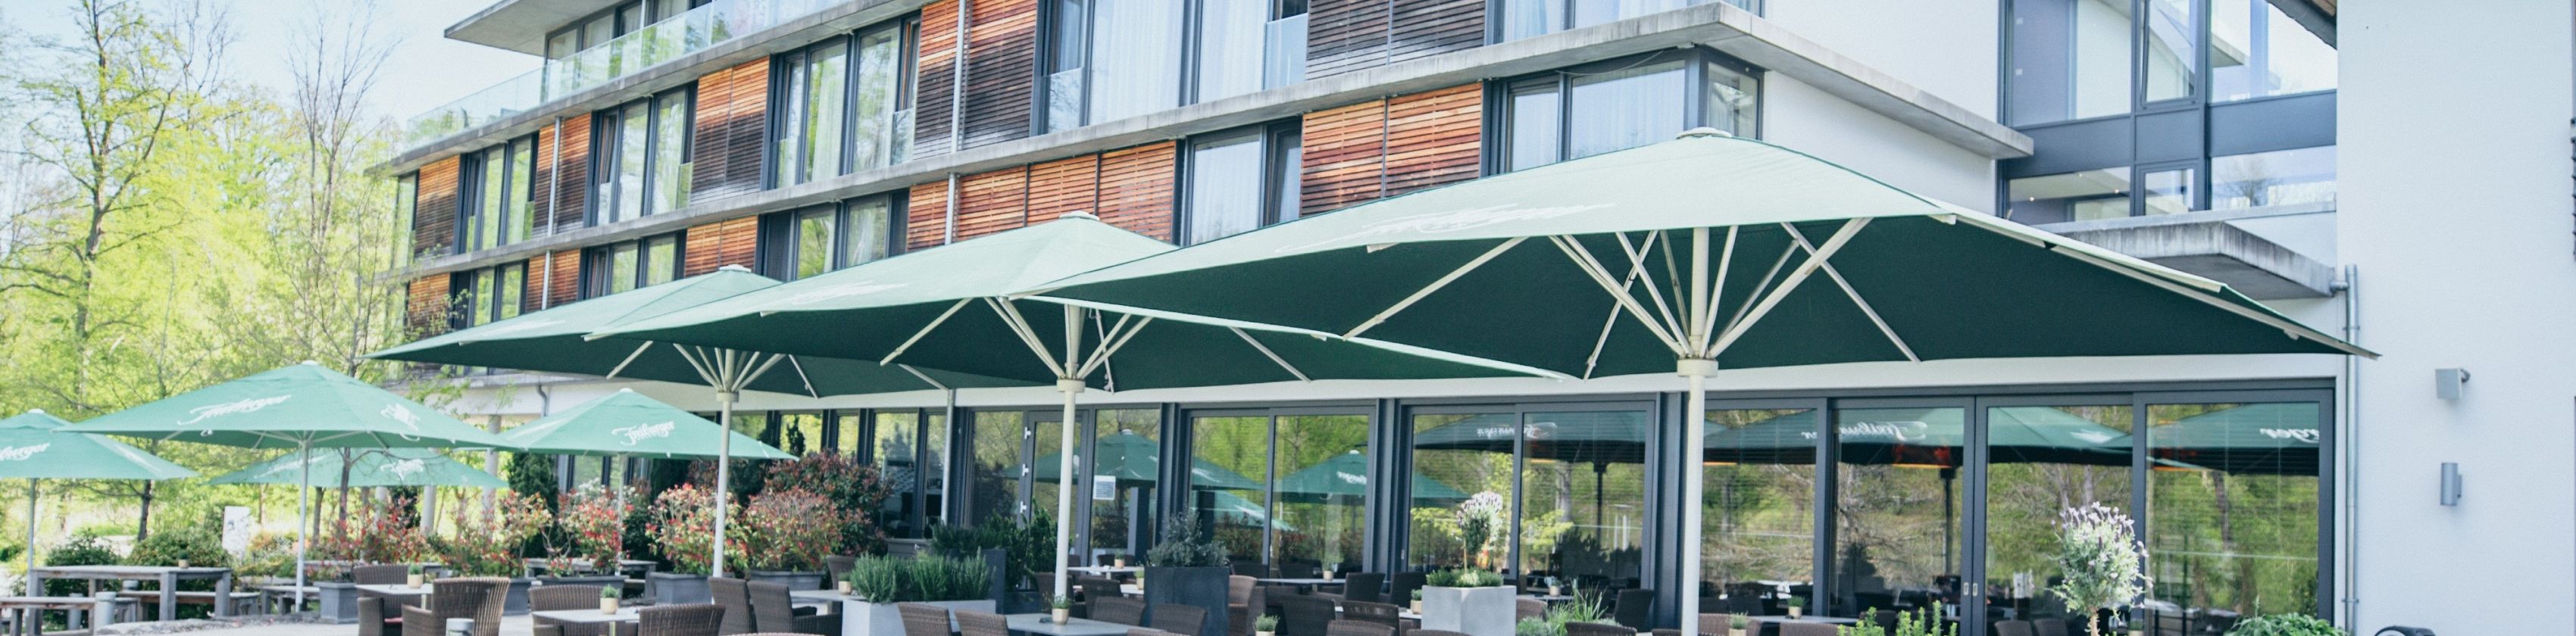 Terrasse Dorint Thermenhotel, © BCW Hotels & Resorts GmbH